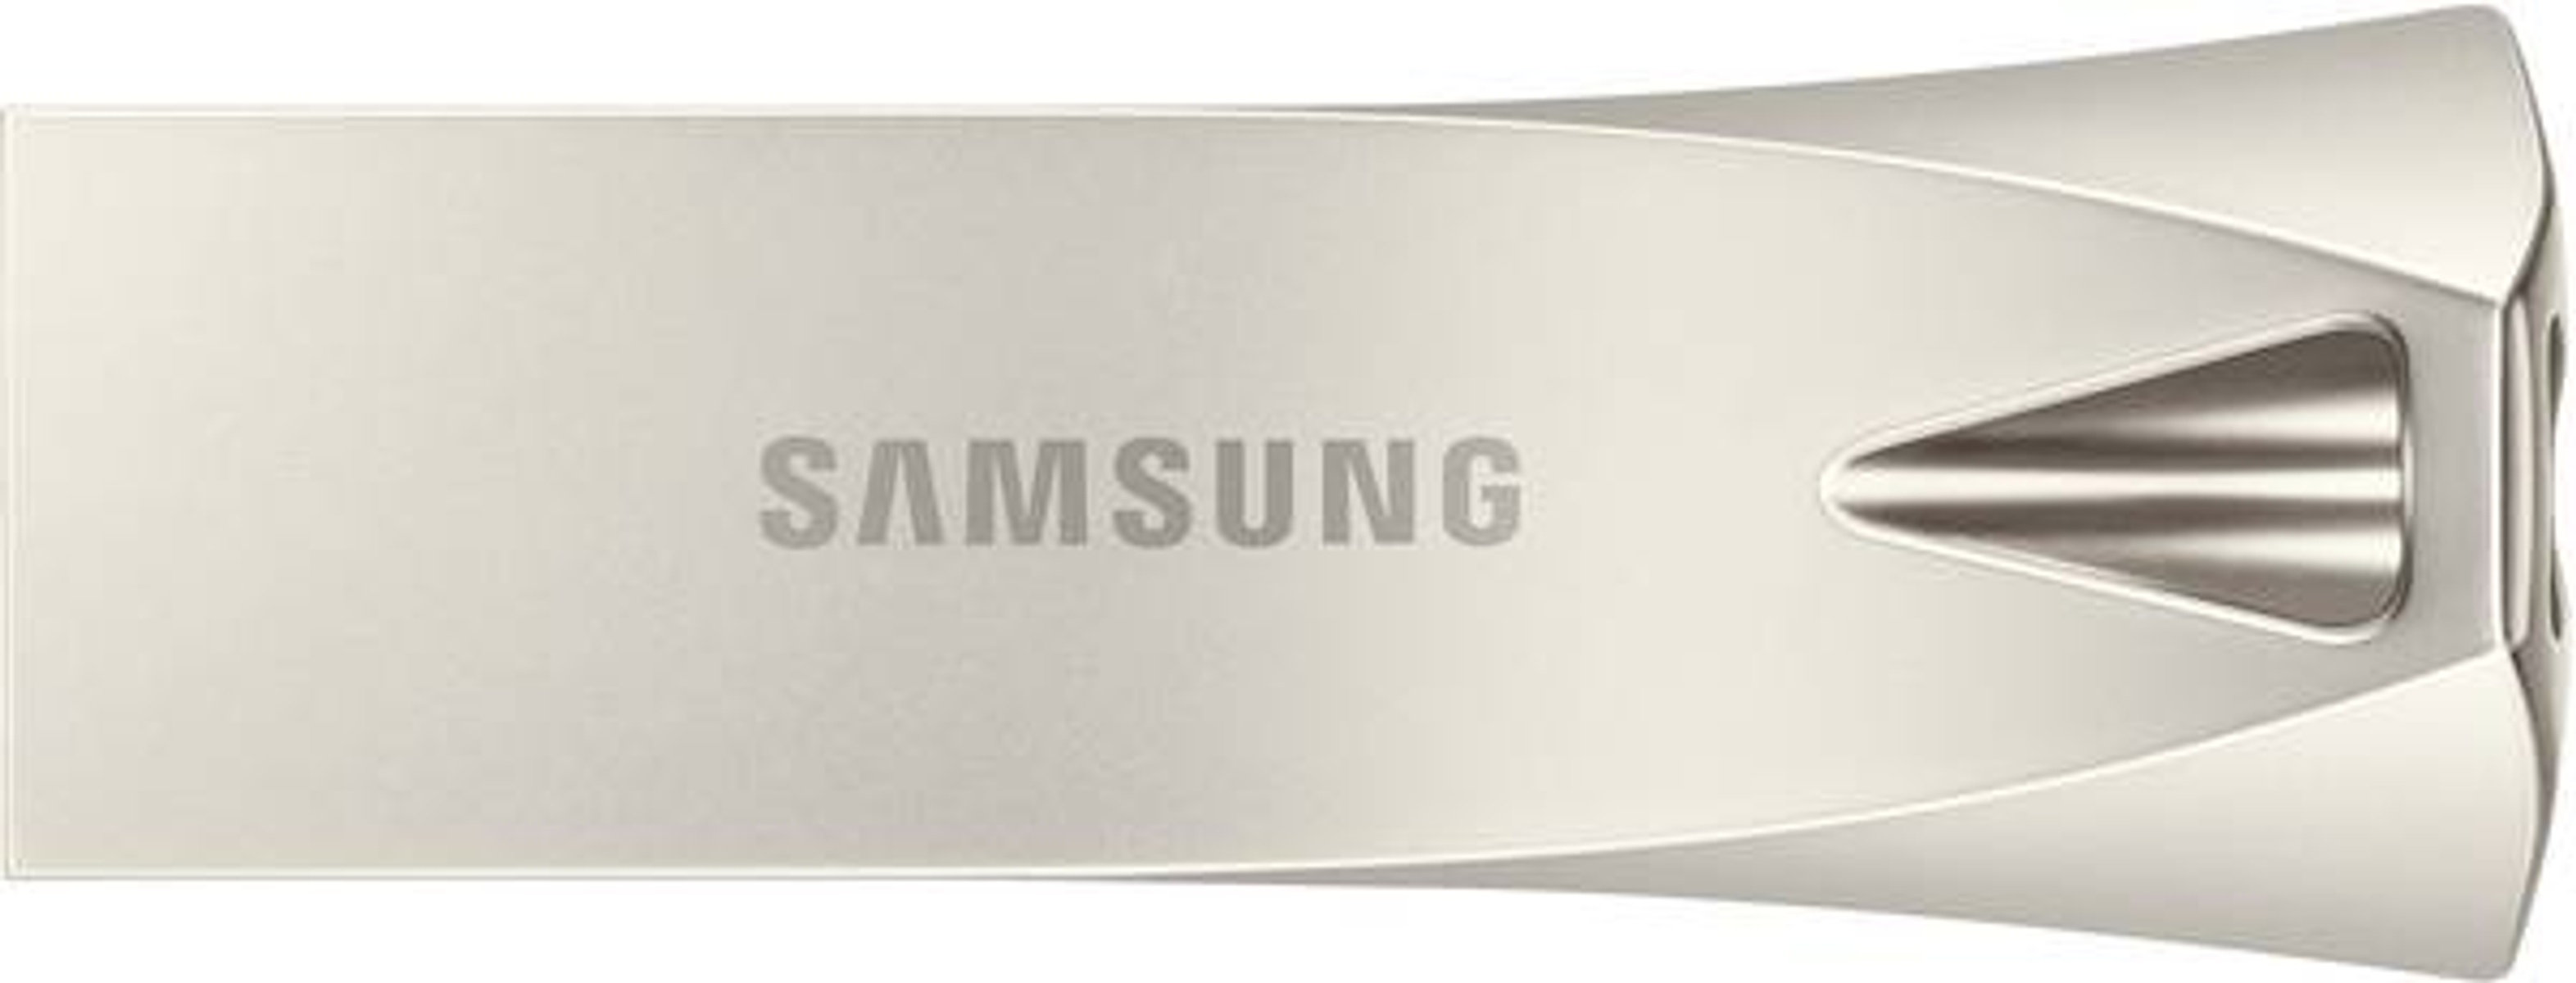 SAMSUNG CHAMPAGNE GB) 128 128GB MUF-128BE3/APC SILVER BAR USB-Stick (Champagner, PLUS